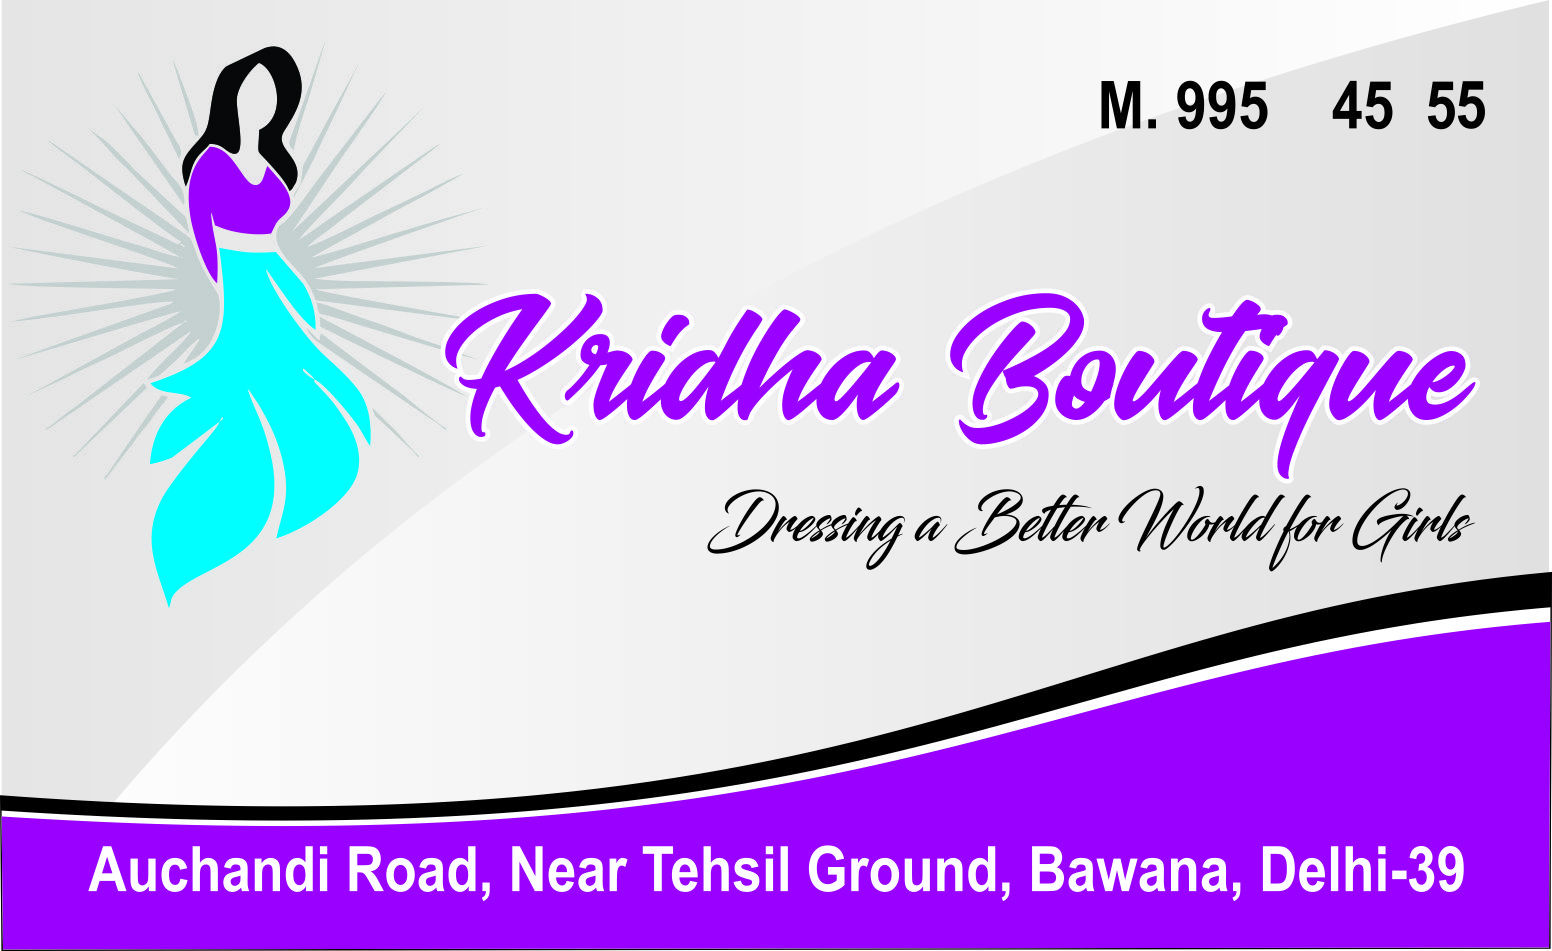 Boutique Banner Design in Hindi - Design Guruji